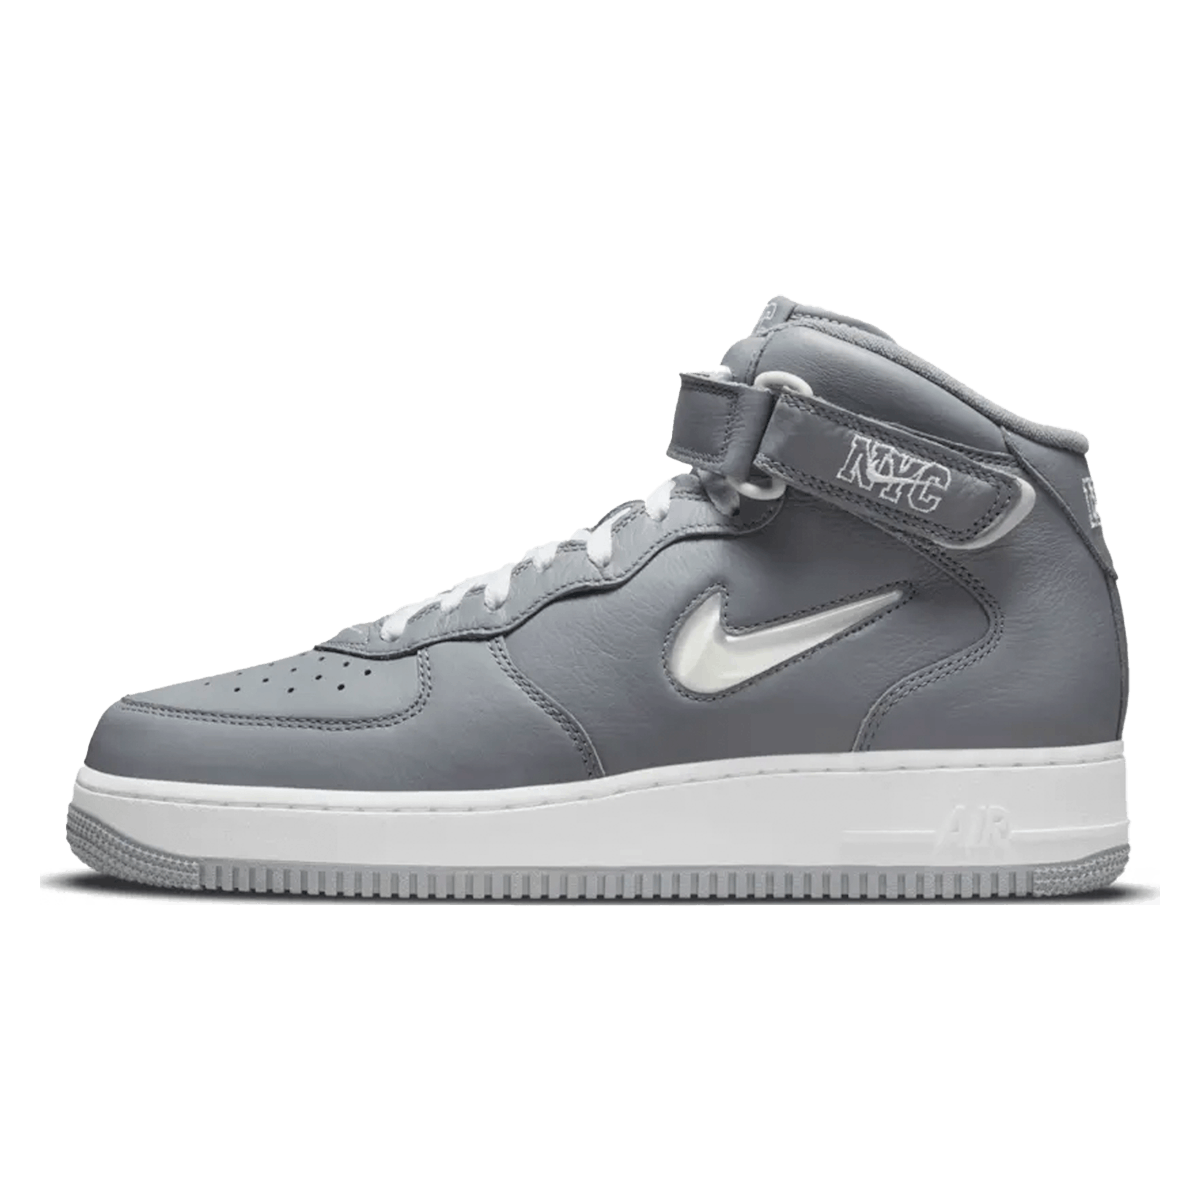 Nike Air Force 1 Mid Jewel "NYC Cool Grey"